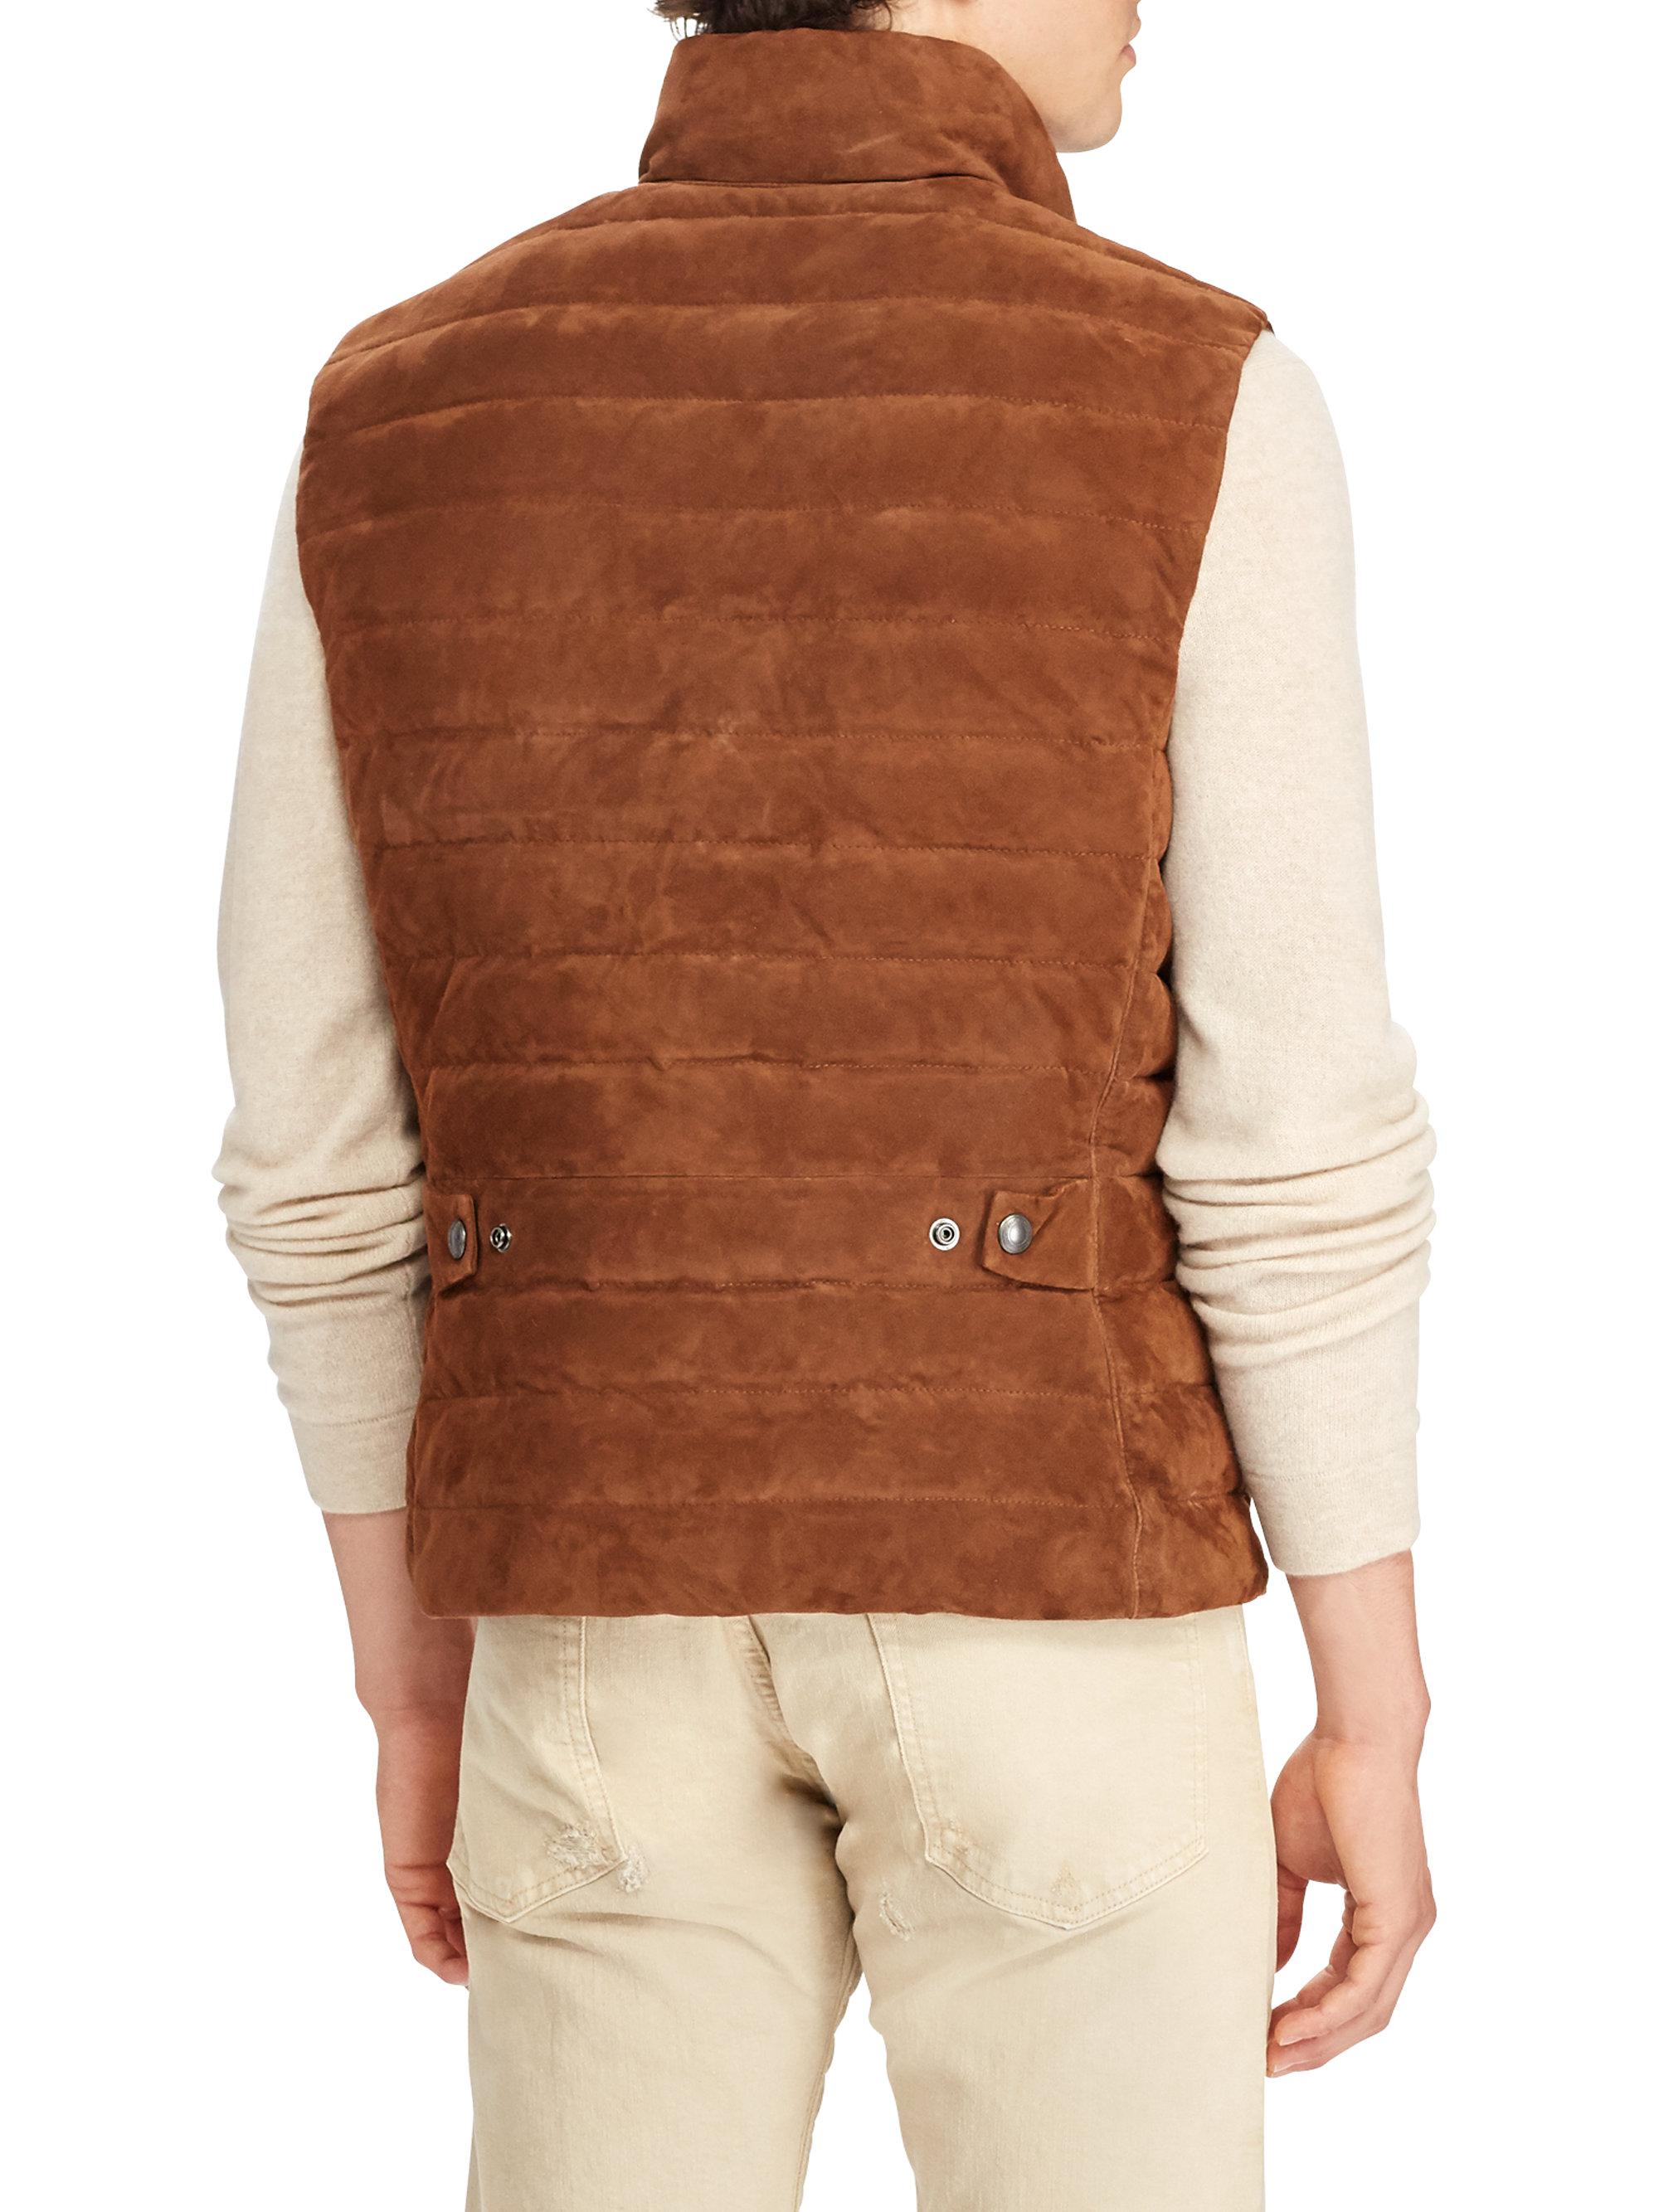 Introducir 60+ imagen polo ralph lauren jacket vest - Thcshoanghoatham ...